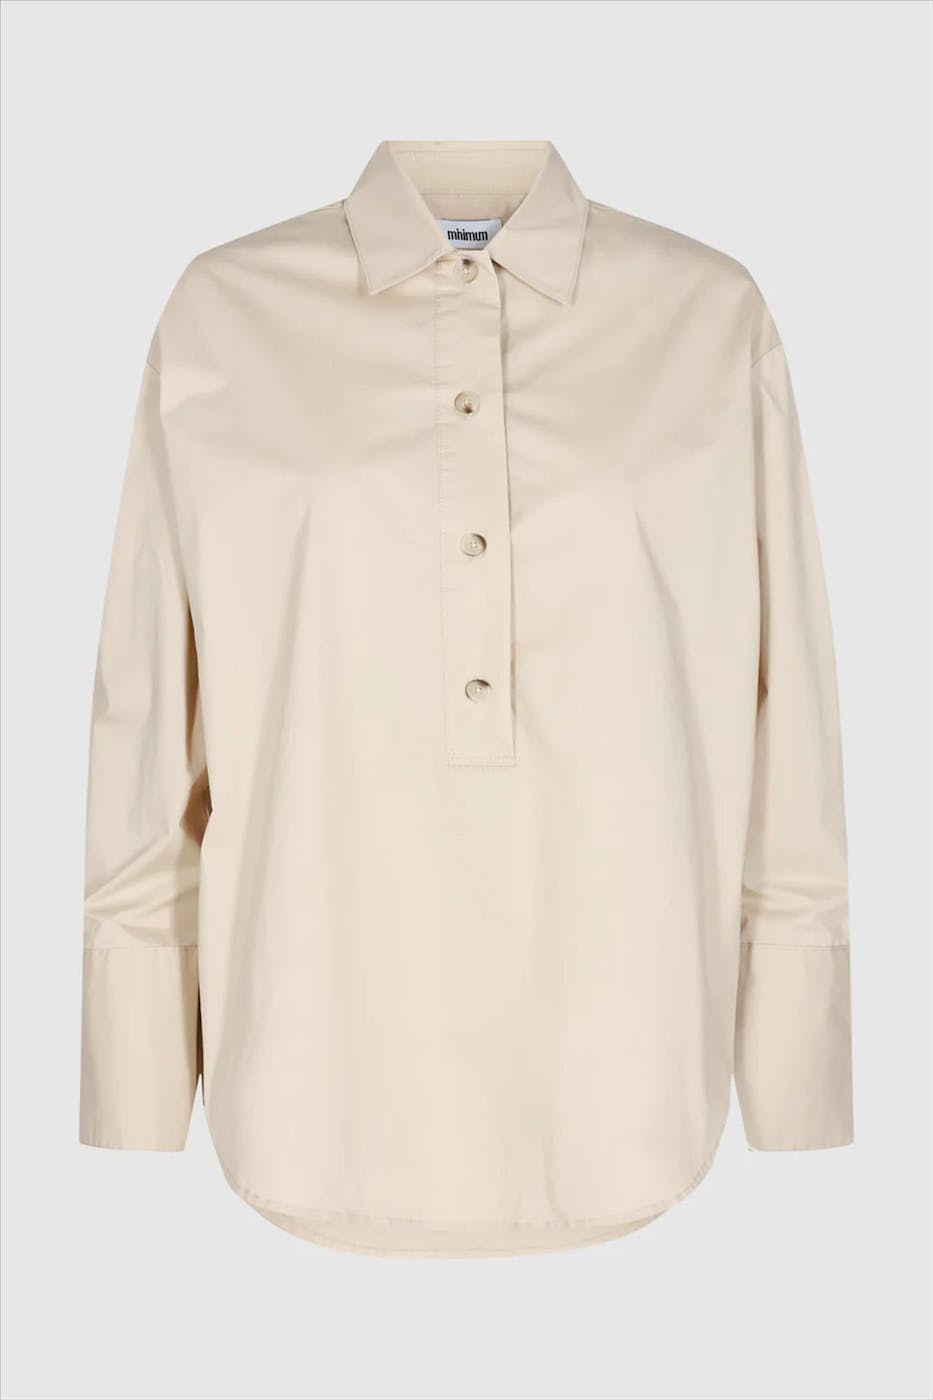 Minimum - Beige Scopine blouse